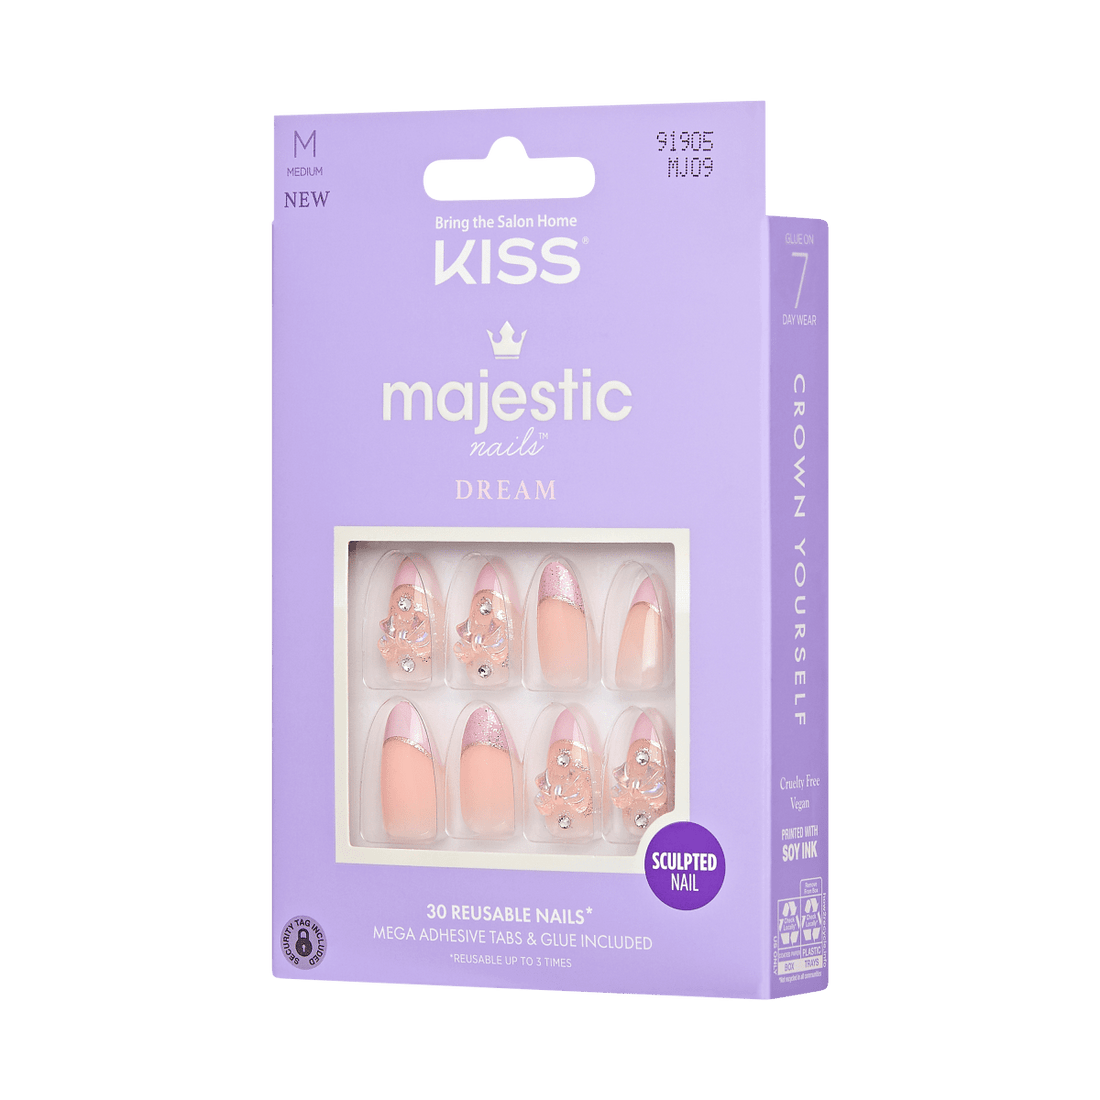 KISS Majestic Nails - Maestro